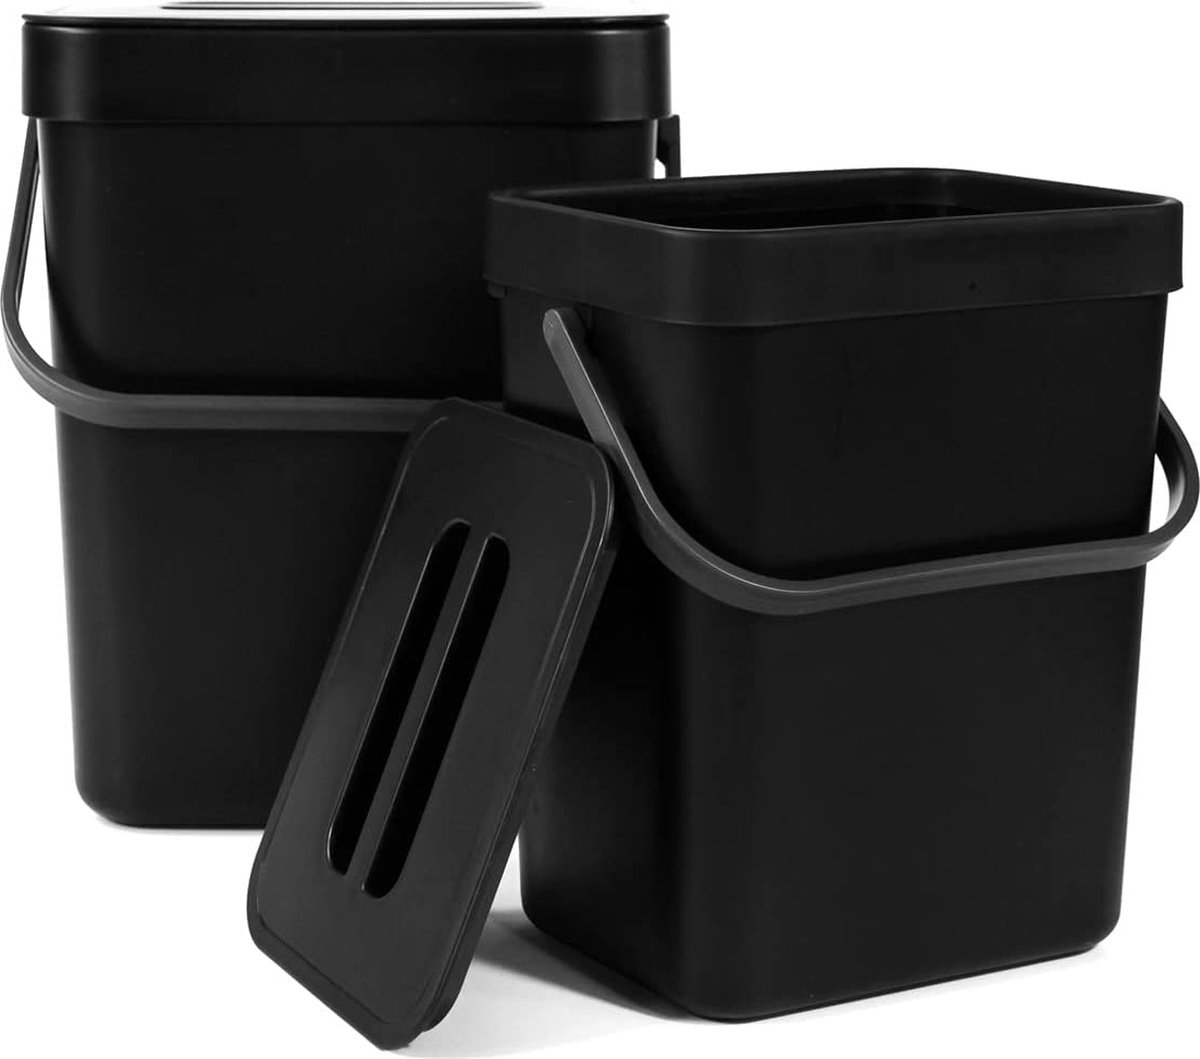 Spesh gft-bak keukenset van 2 (5L + 3L) kunststof compostbak geurdicht hangbare afvalbak met deksel voor het dagelijkse gft-afval (zwart)